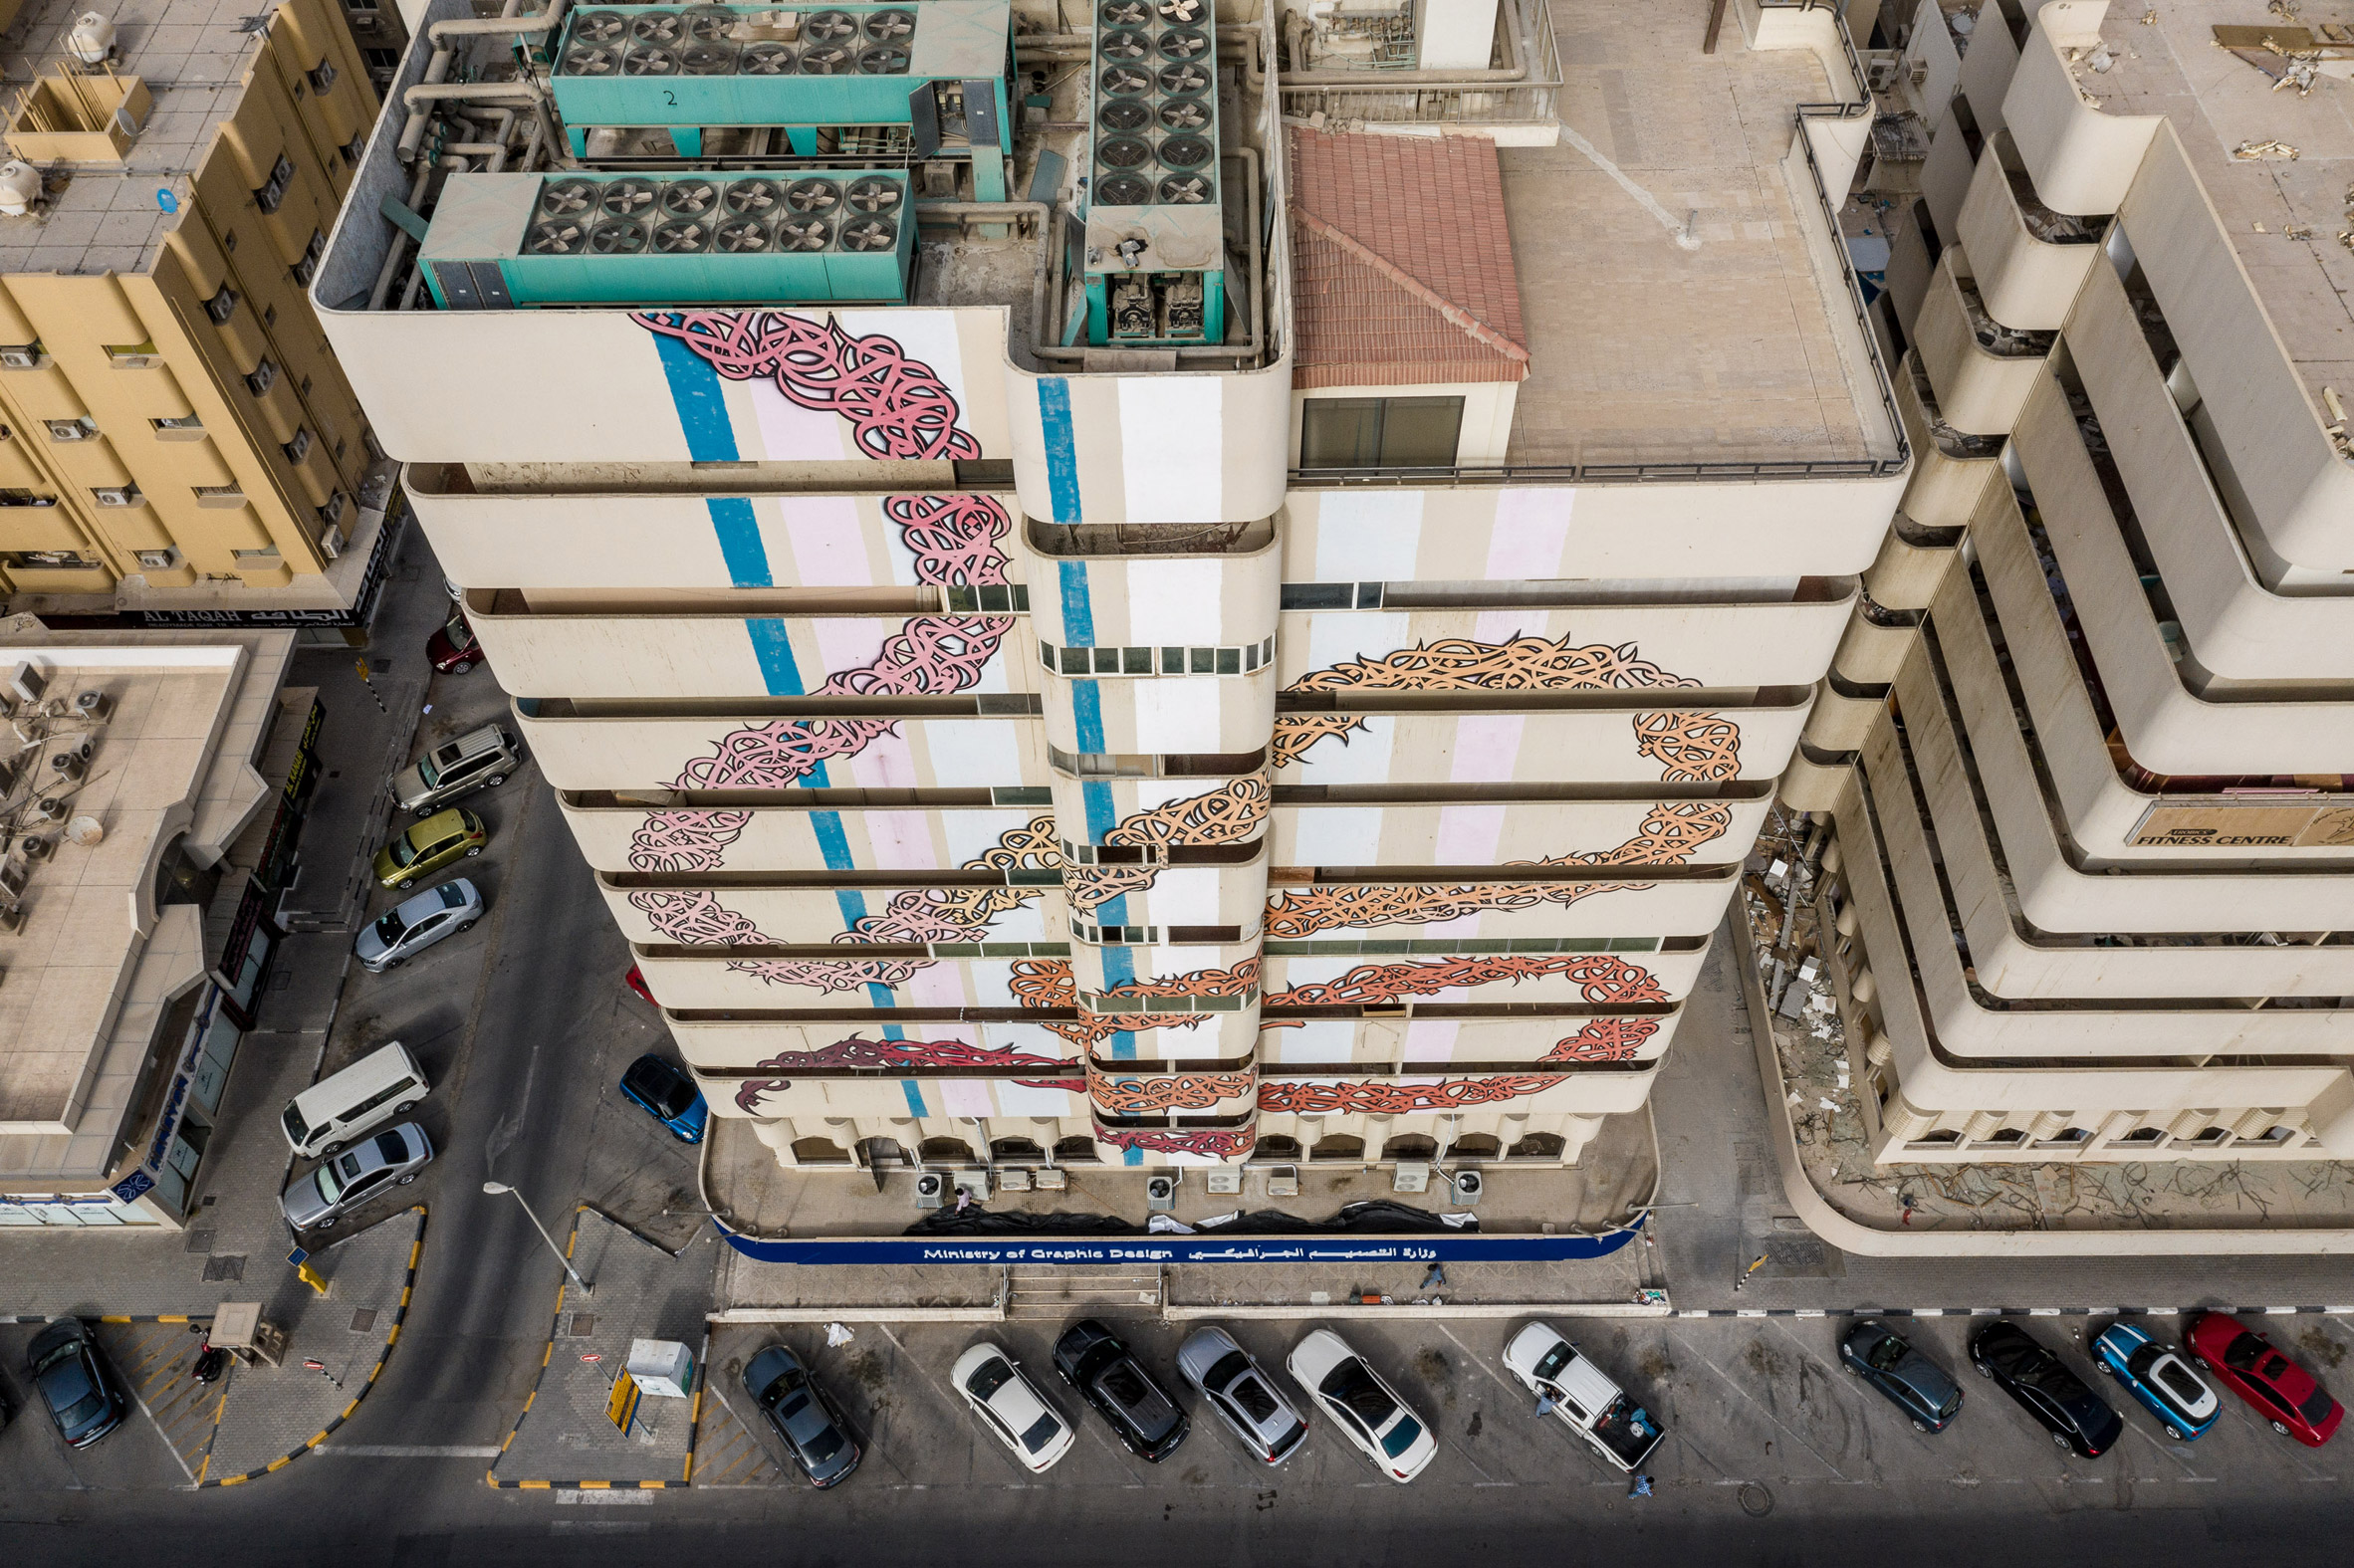 Fikra Graphic Design Biennial "sets a precedent" for adaptive reuse in UAE